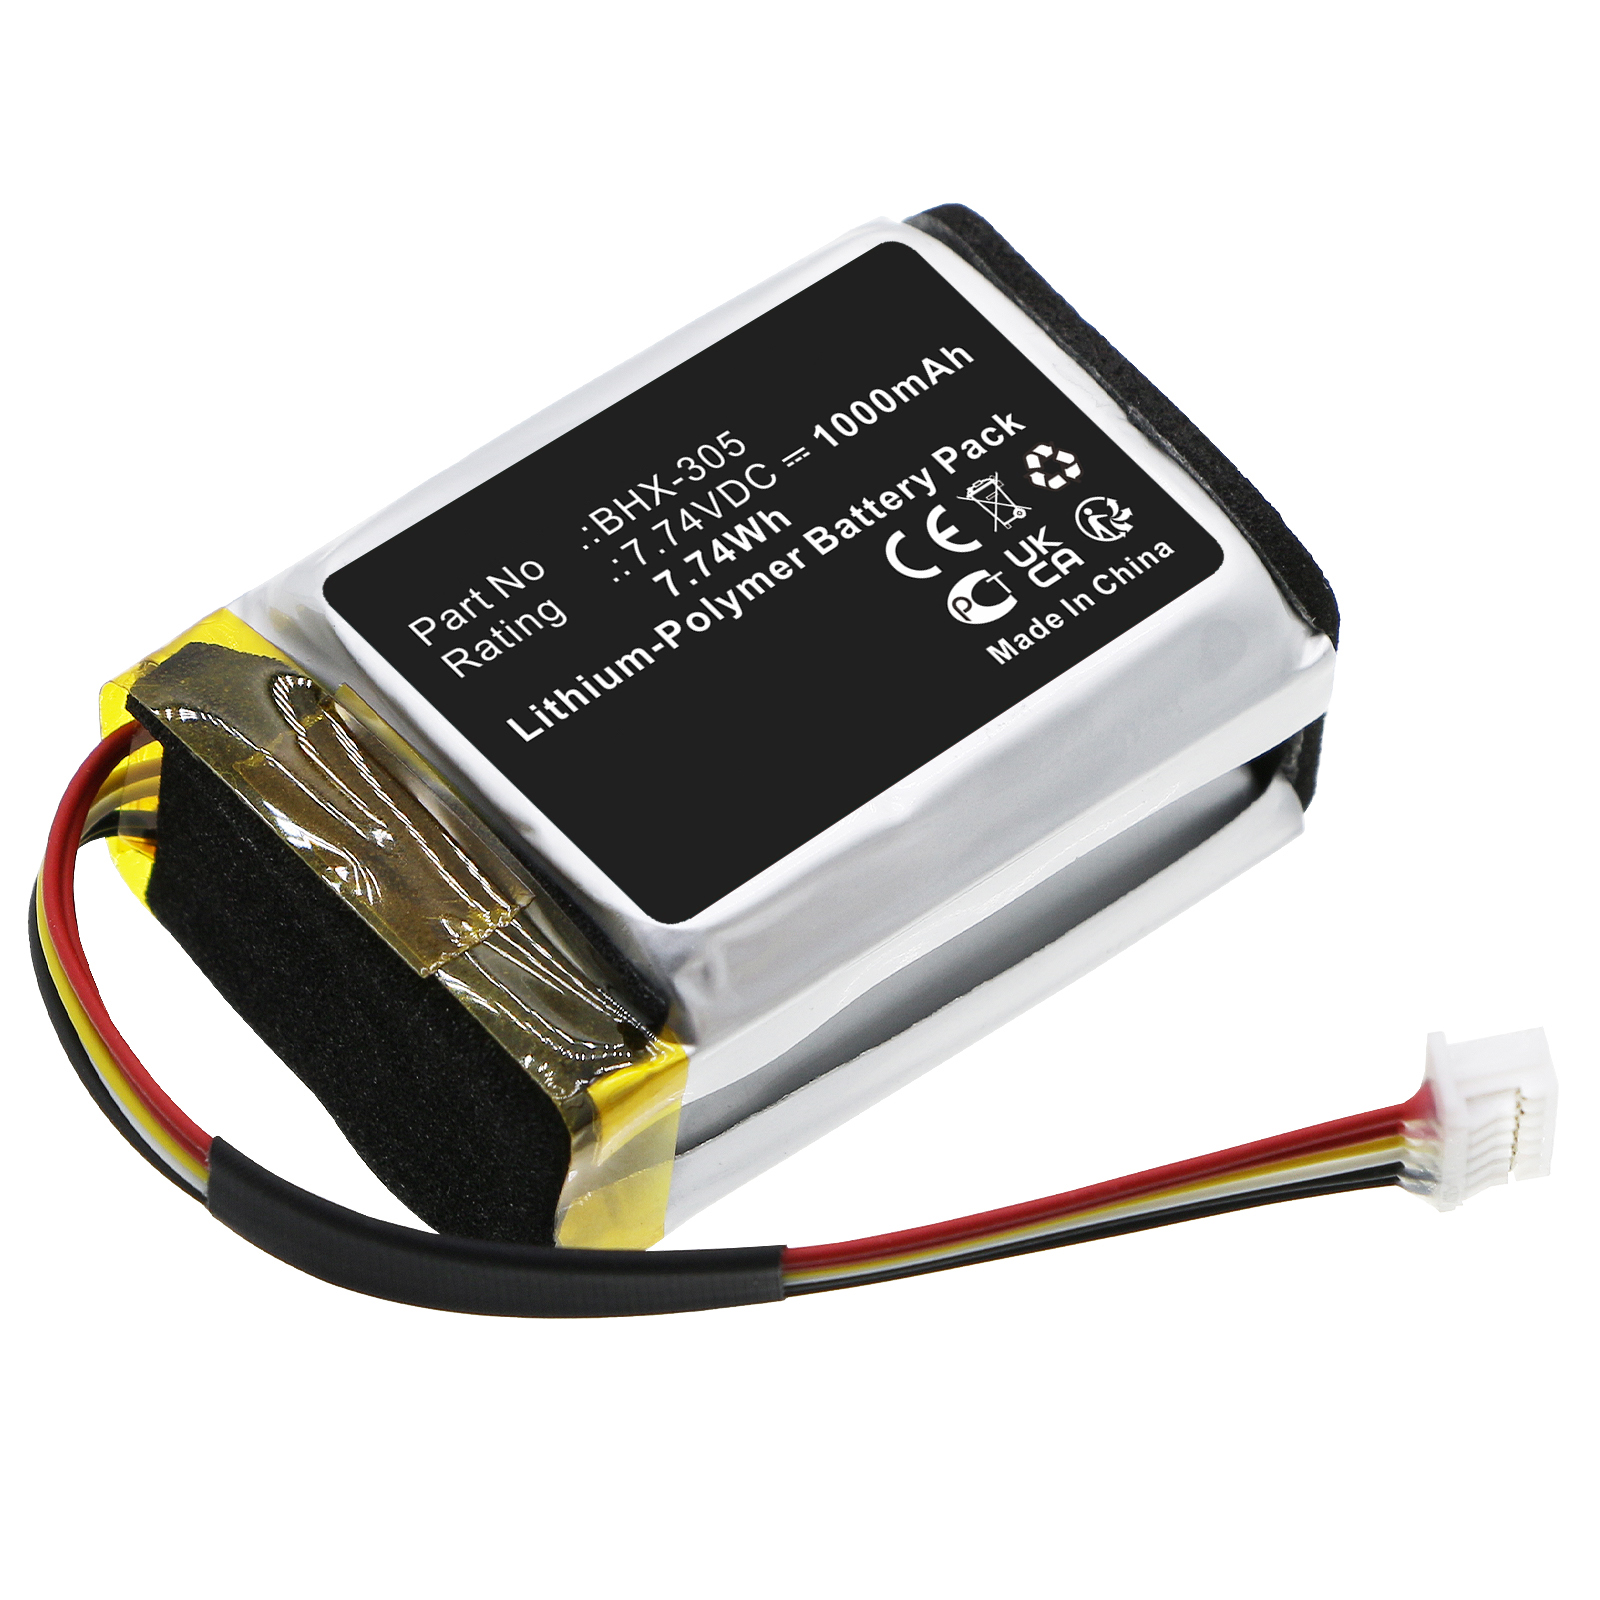 Synergy Digital Digital Camera Battery, Compatible with DJI BHX-305 Digital Camera Battery (Li-Pol, 7.74V, 1000mAh)